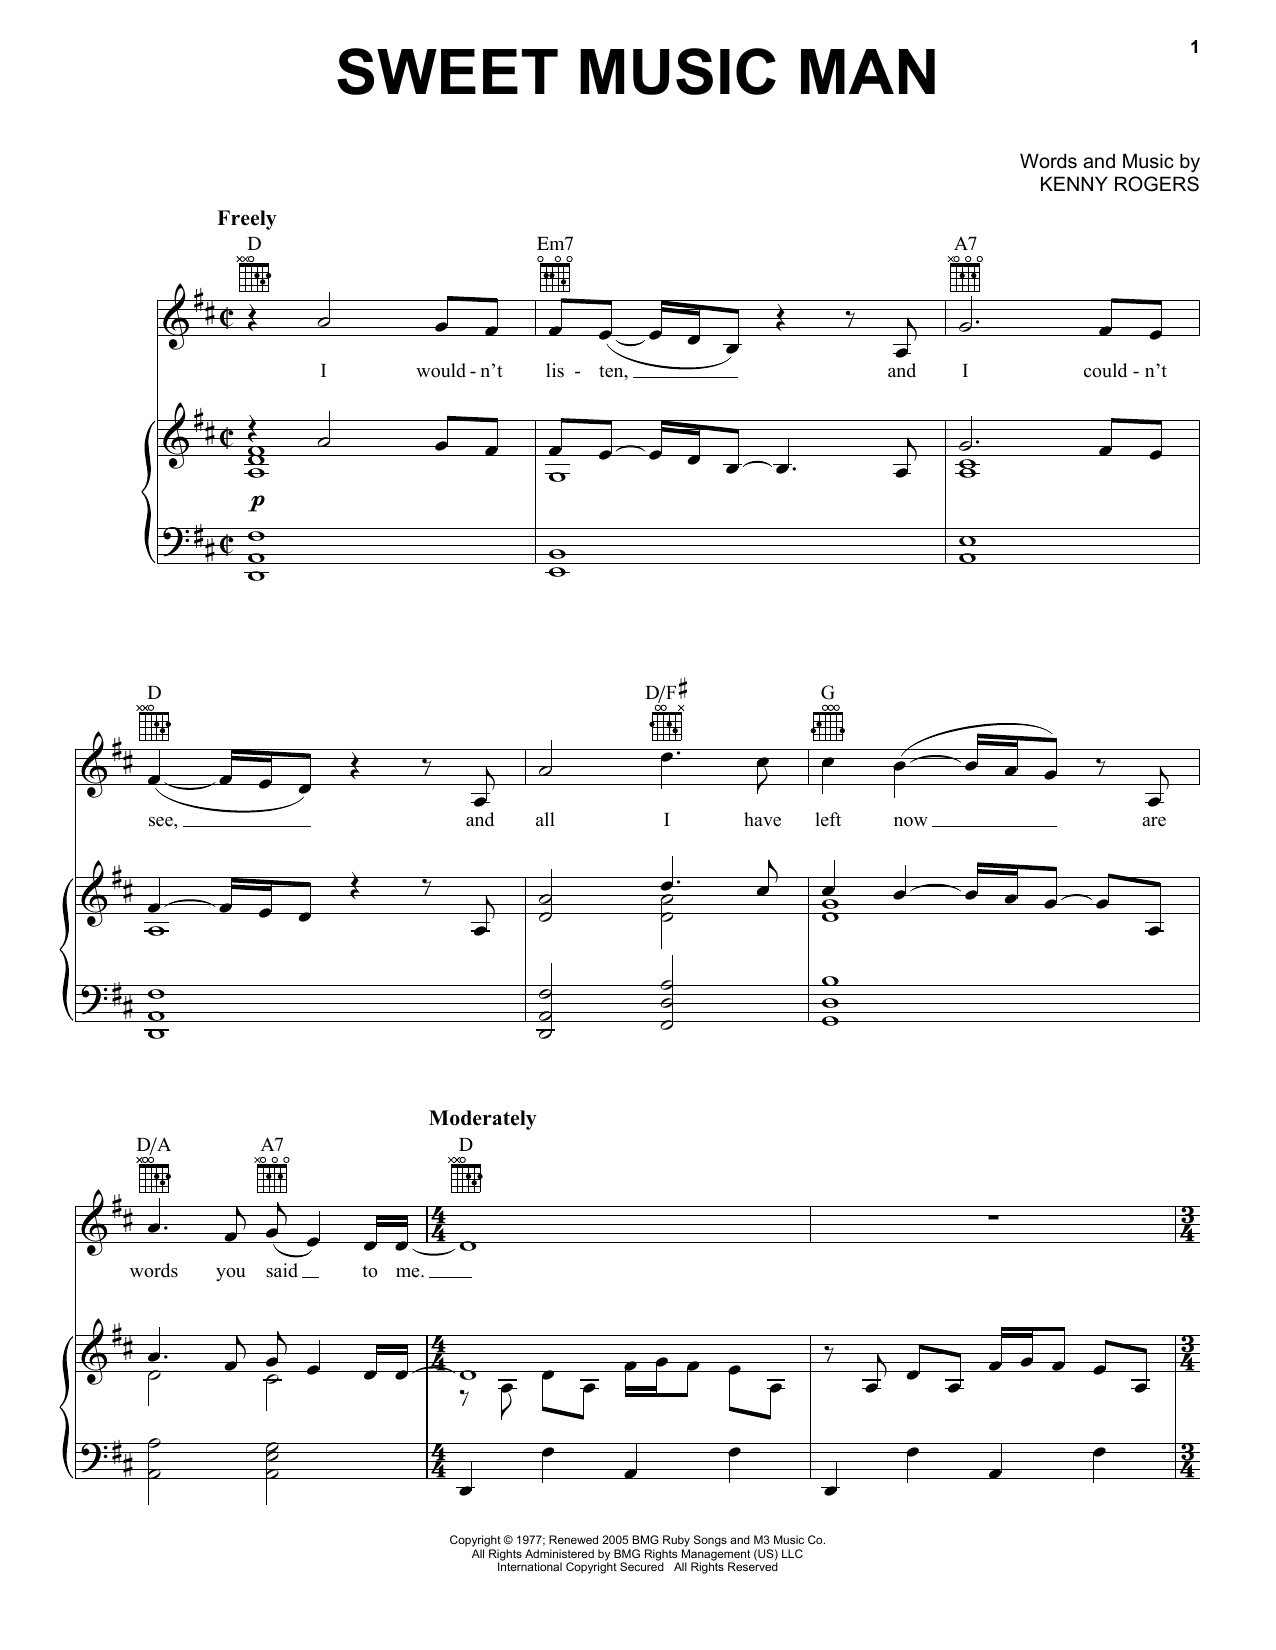 Kenny Rogers Sweet Music Man Sheet Music Notes & Chords for Lyrics & Chords - Download or Print PDF